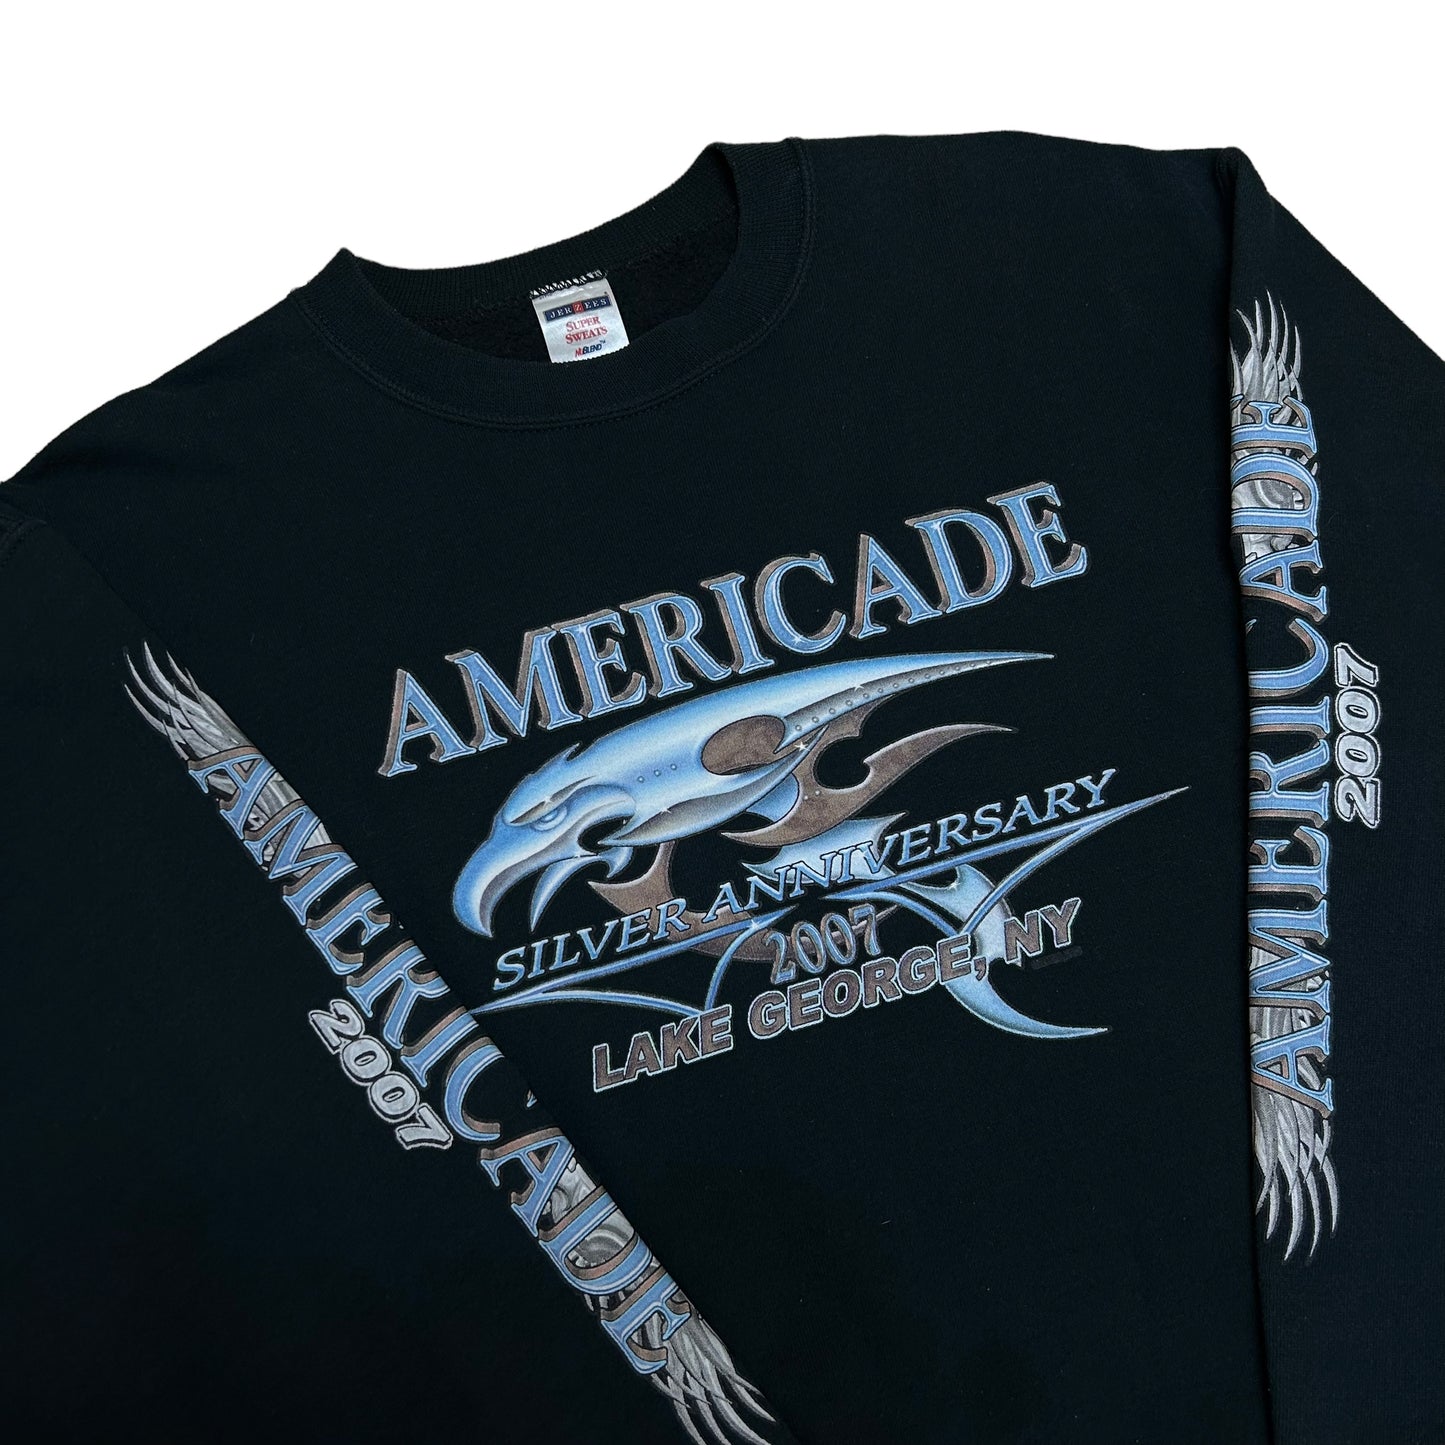 Late 2000s Americade Biker Rally Lake George, NY 2007 Black Crewneck Sweatshirt - Size Medium (Fits